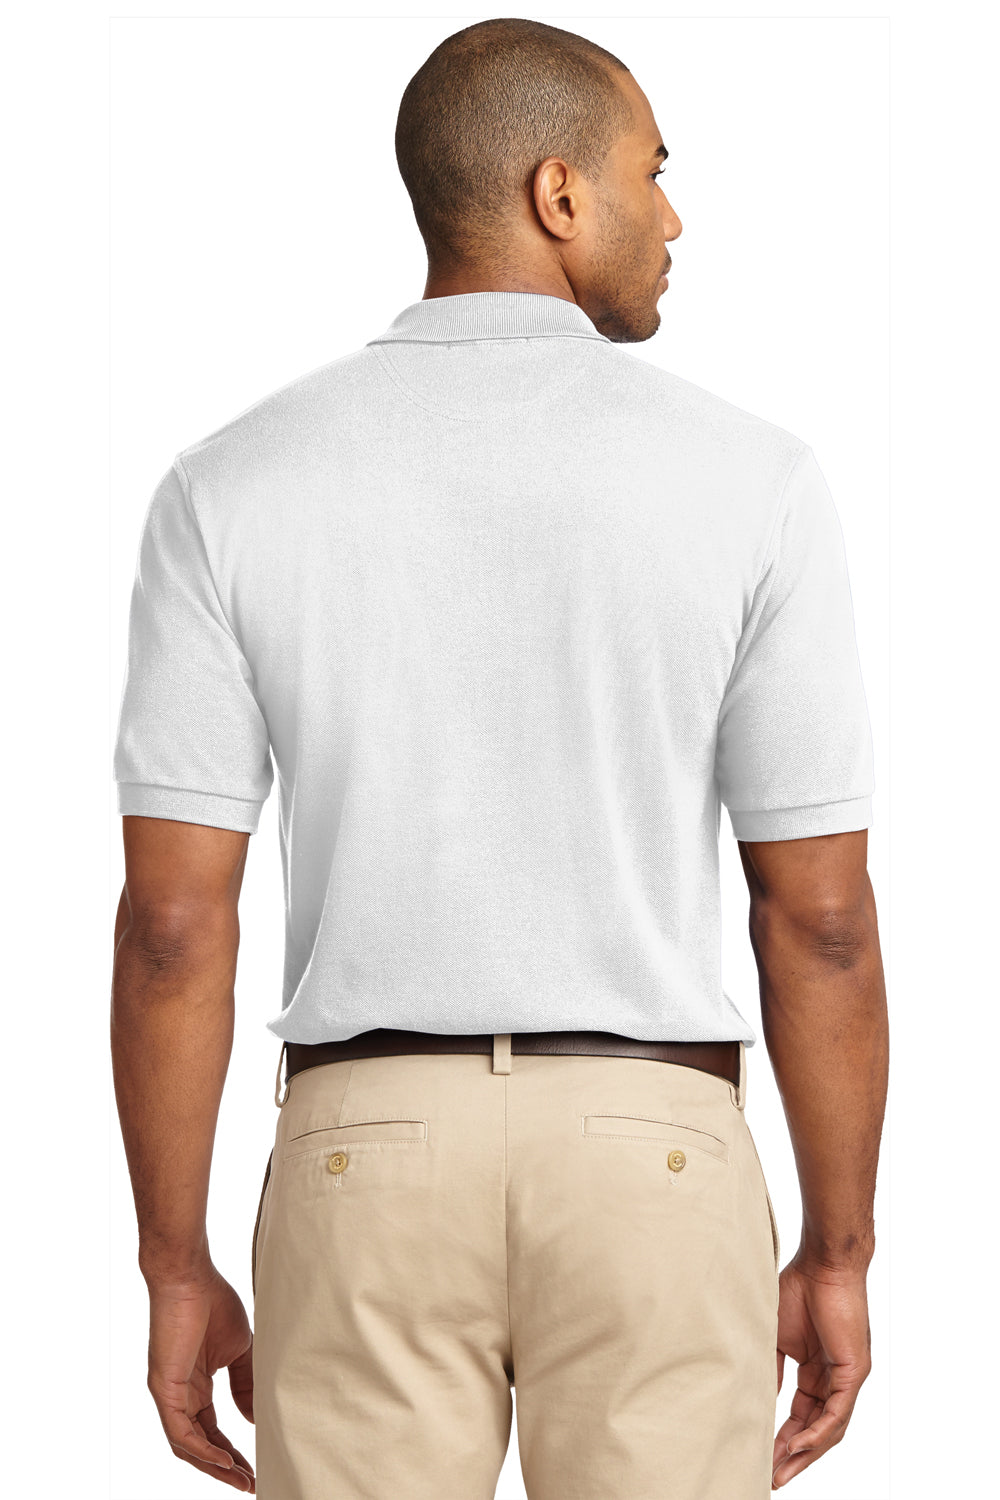 Port Authority K420 Mens Short Sleeve Polo Shirt White Back